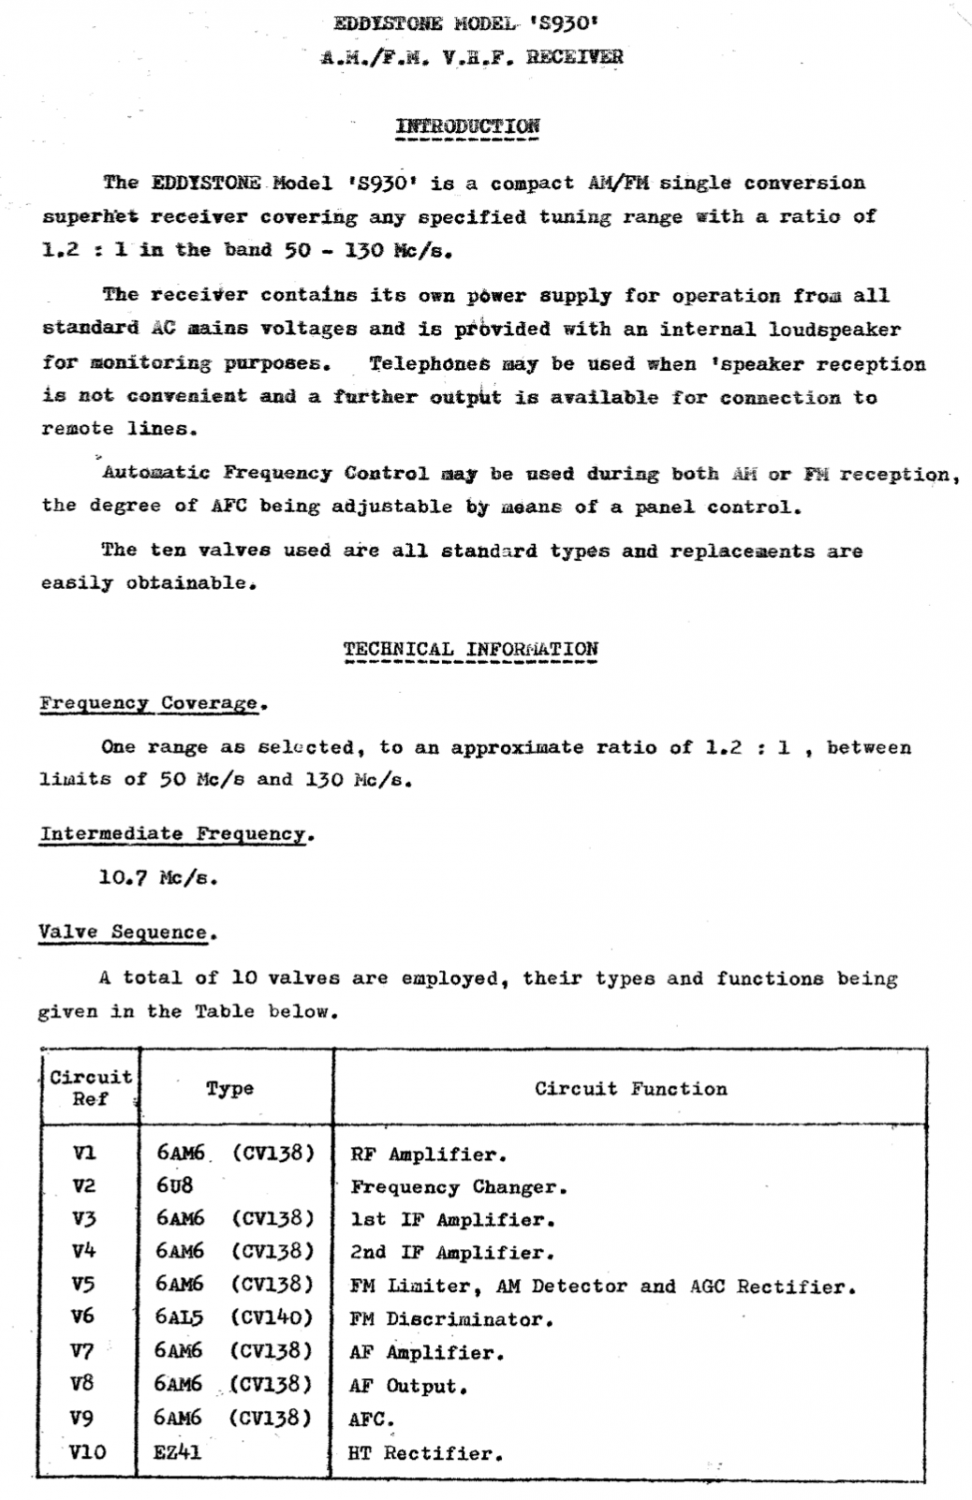 Eddystone Type S.930 AM/FM VHF Receiver - Instruction Manual